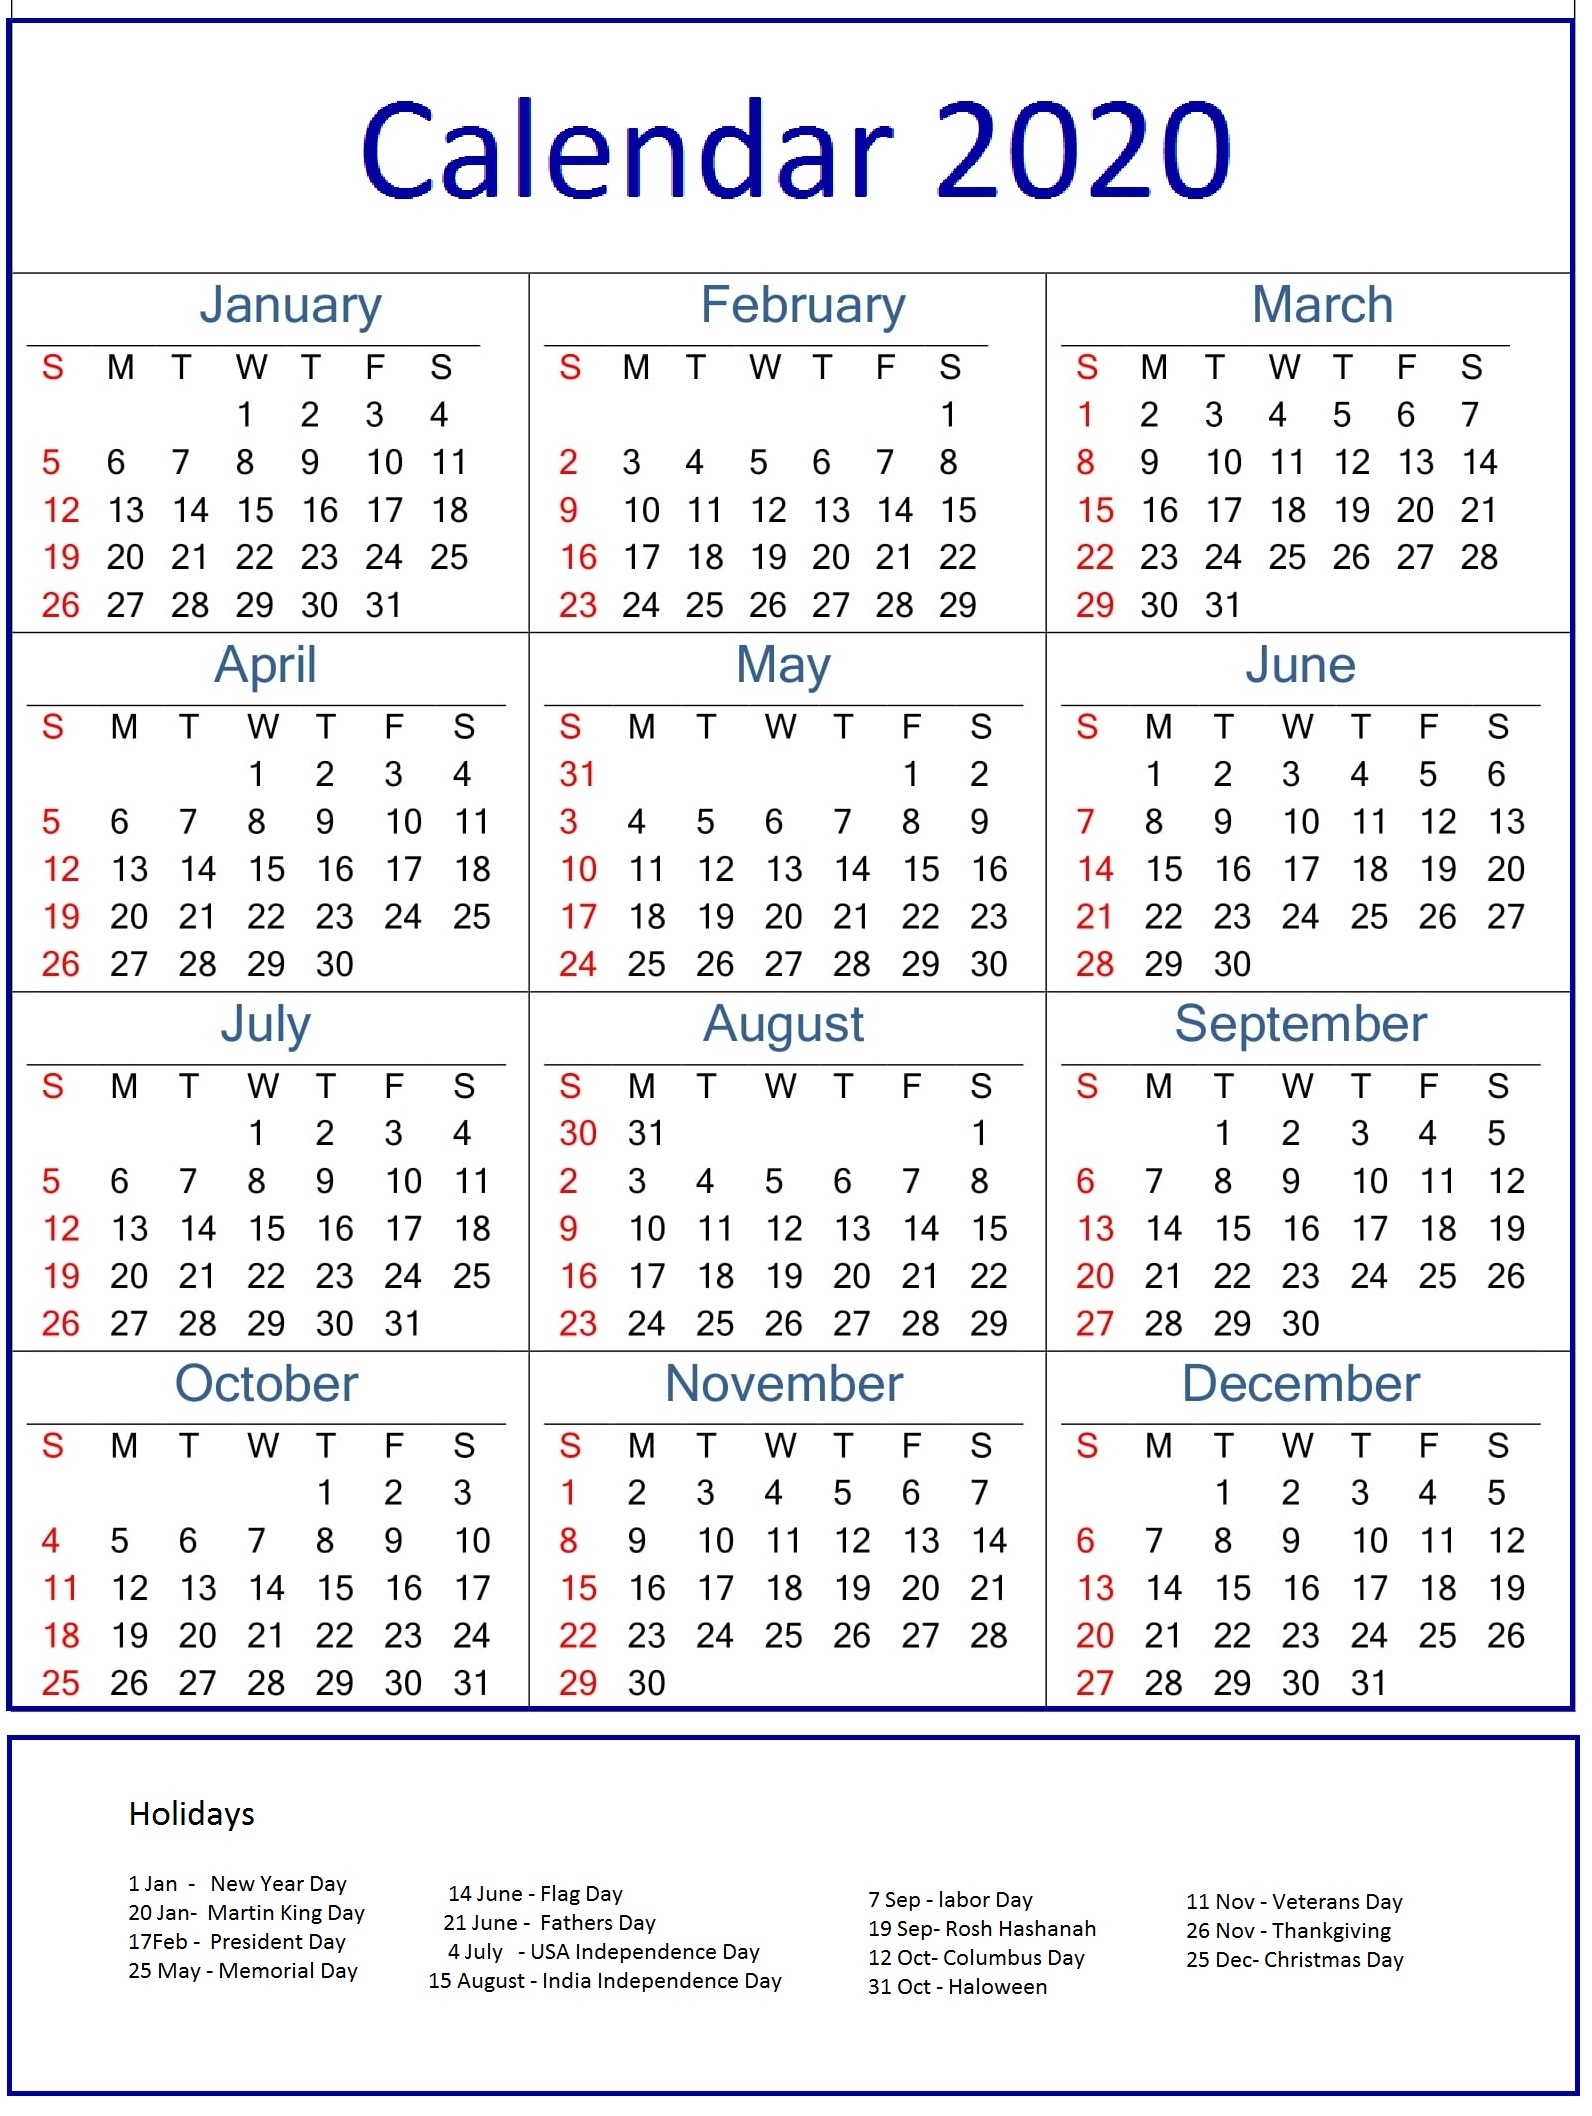 Monthly Calendar Holidays 2020 | Calendar Ideas Design Creative Dashing Calendar Showing Holidays For 2020